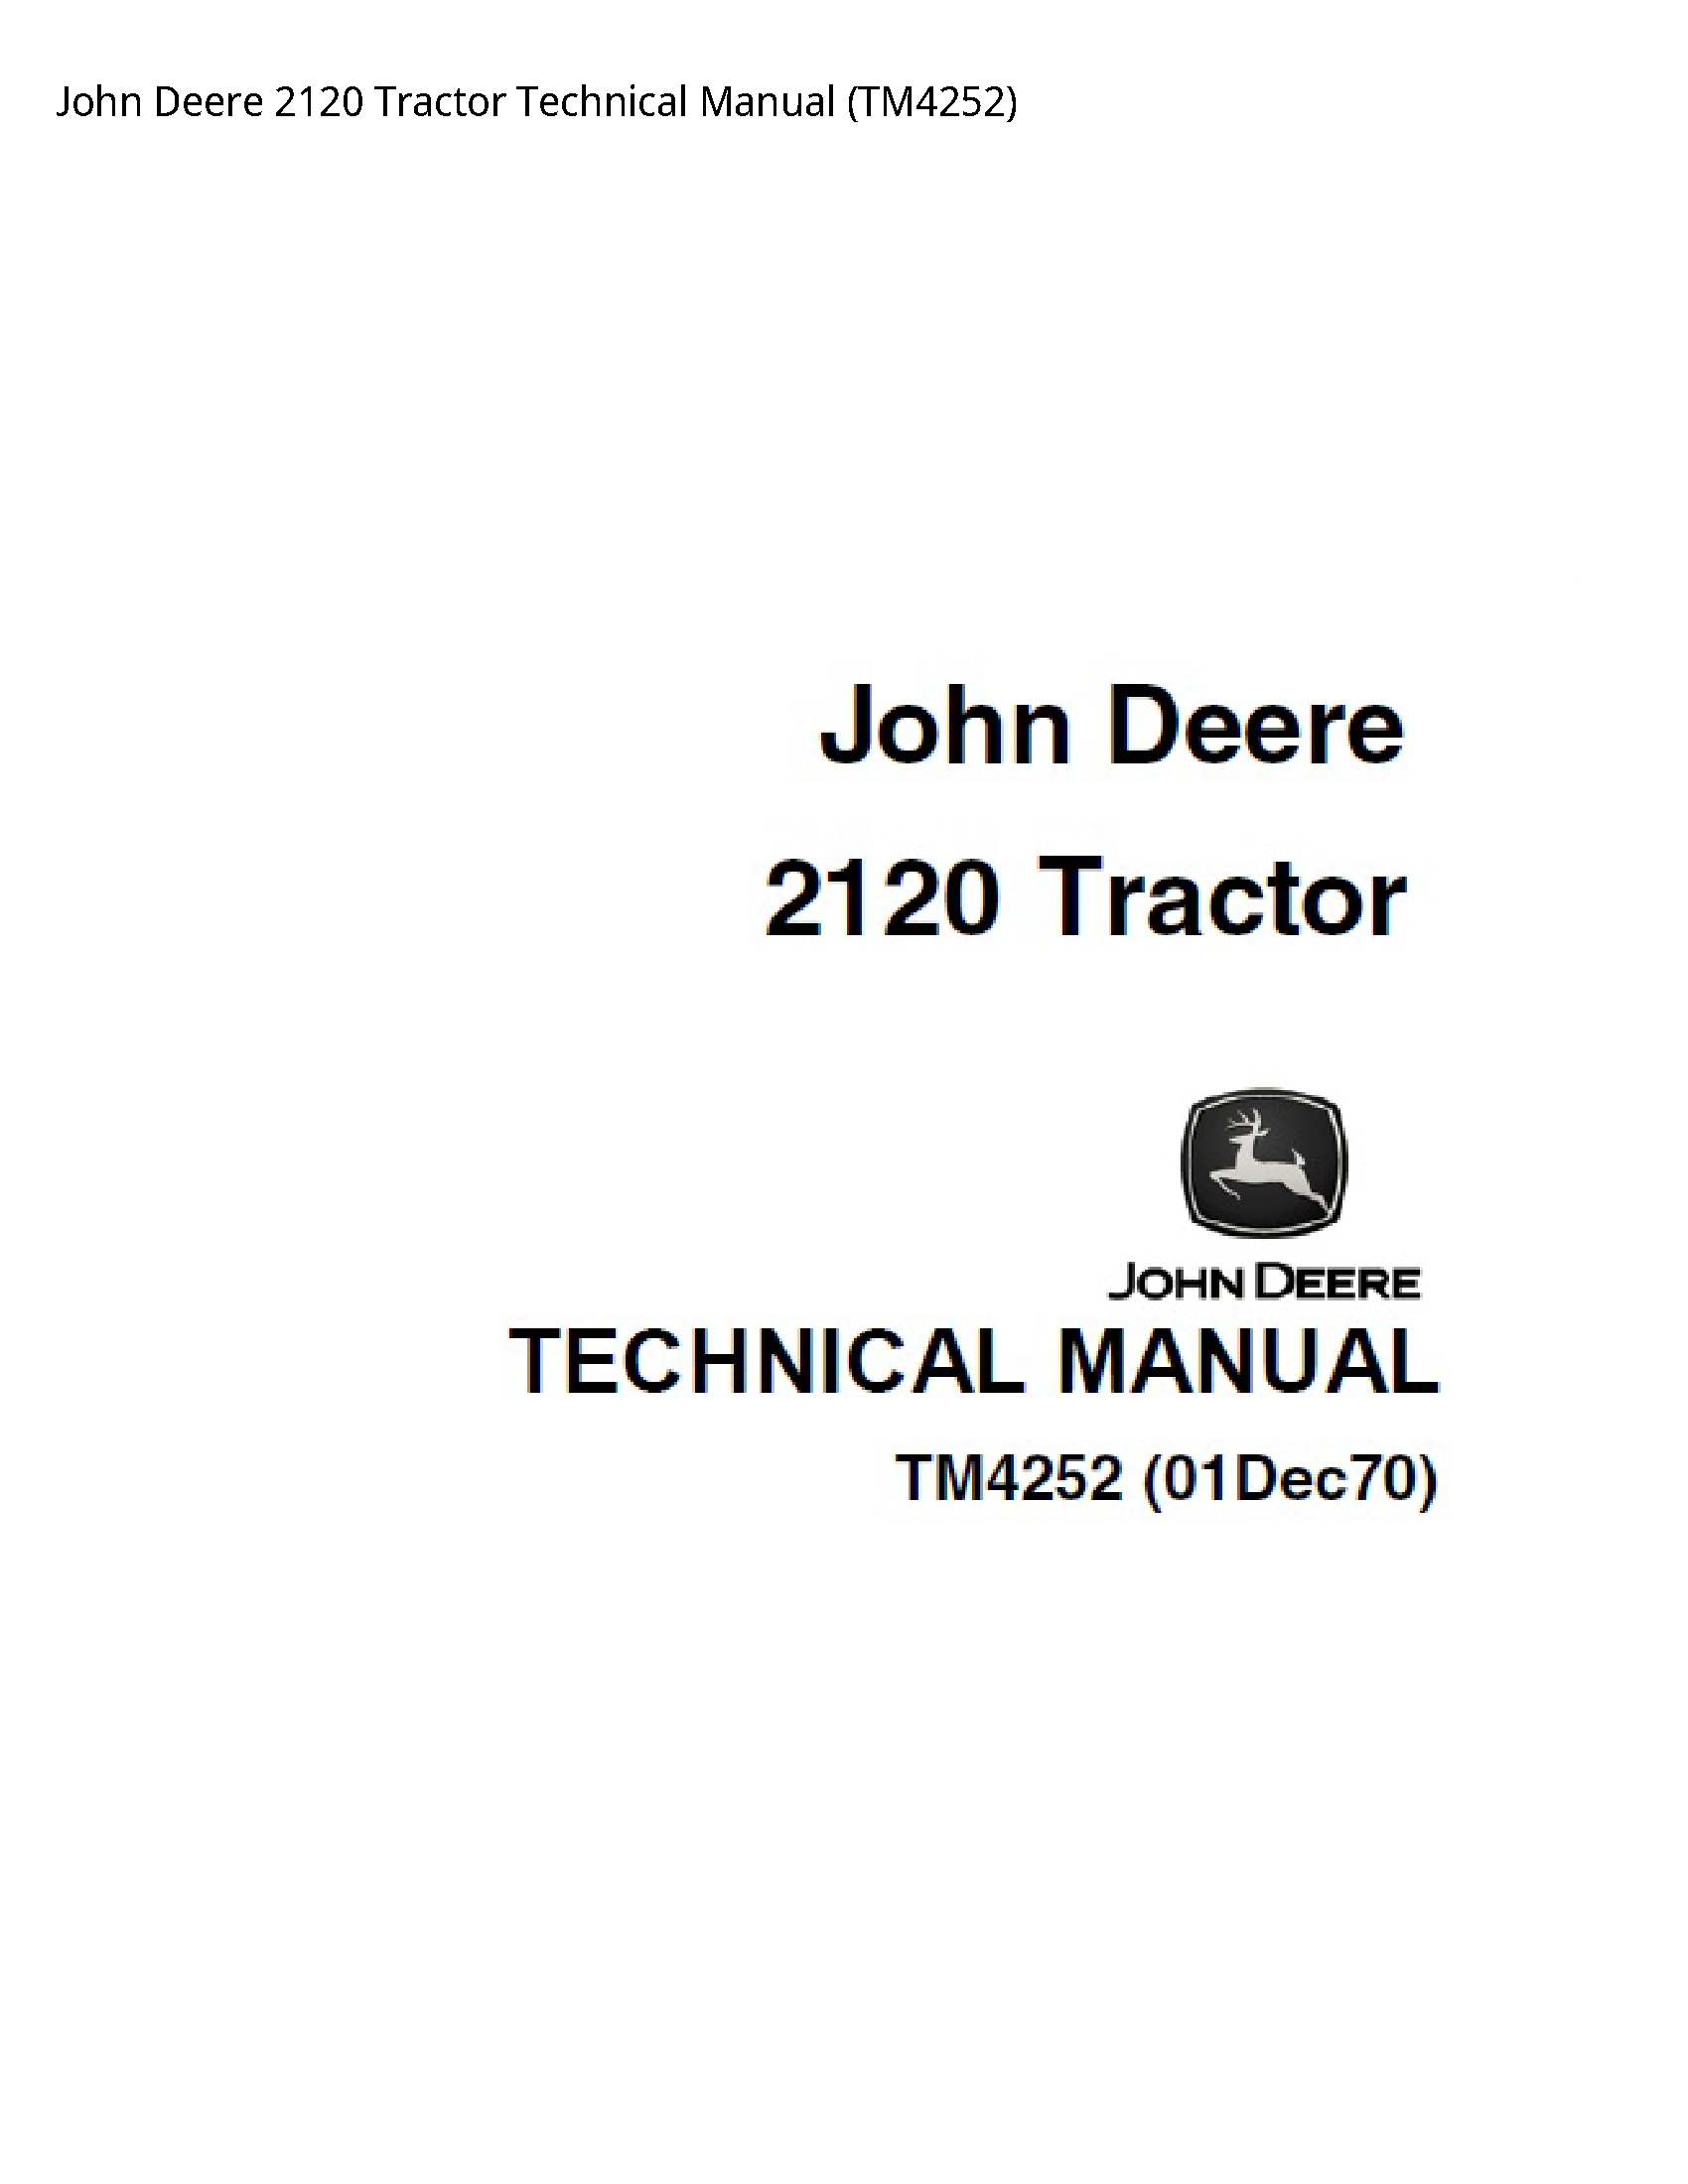 John Deere 2120 Tractor Technical manual